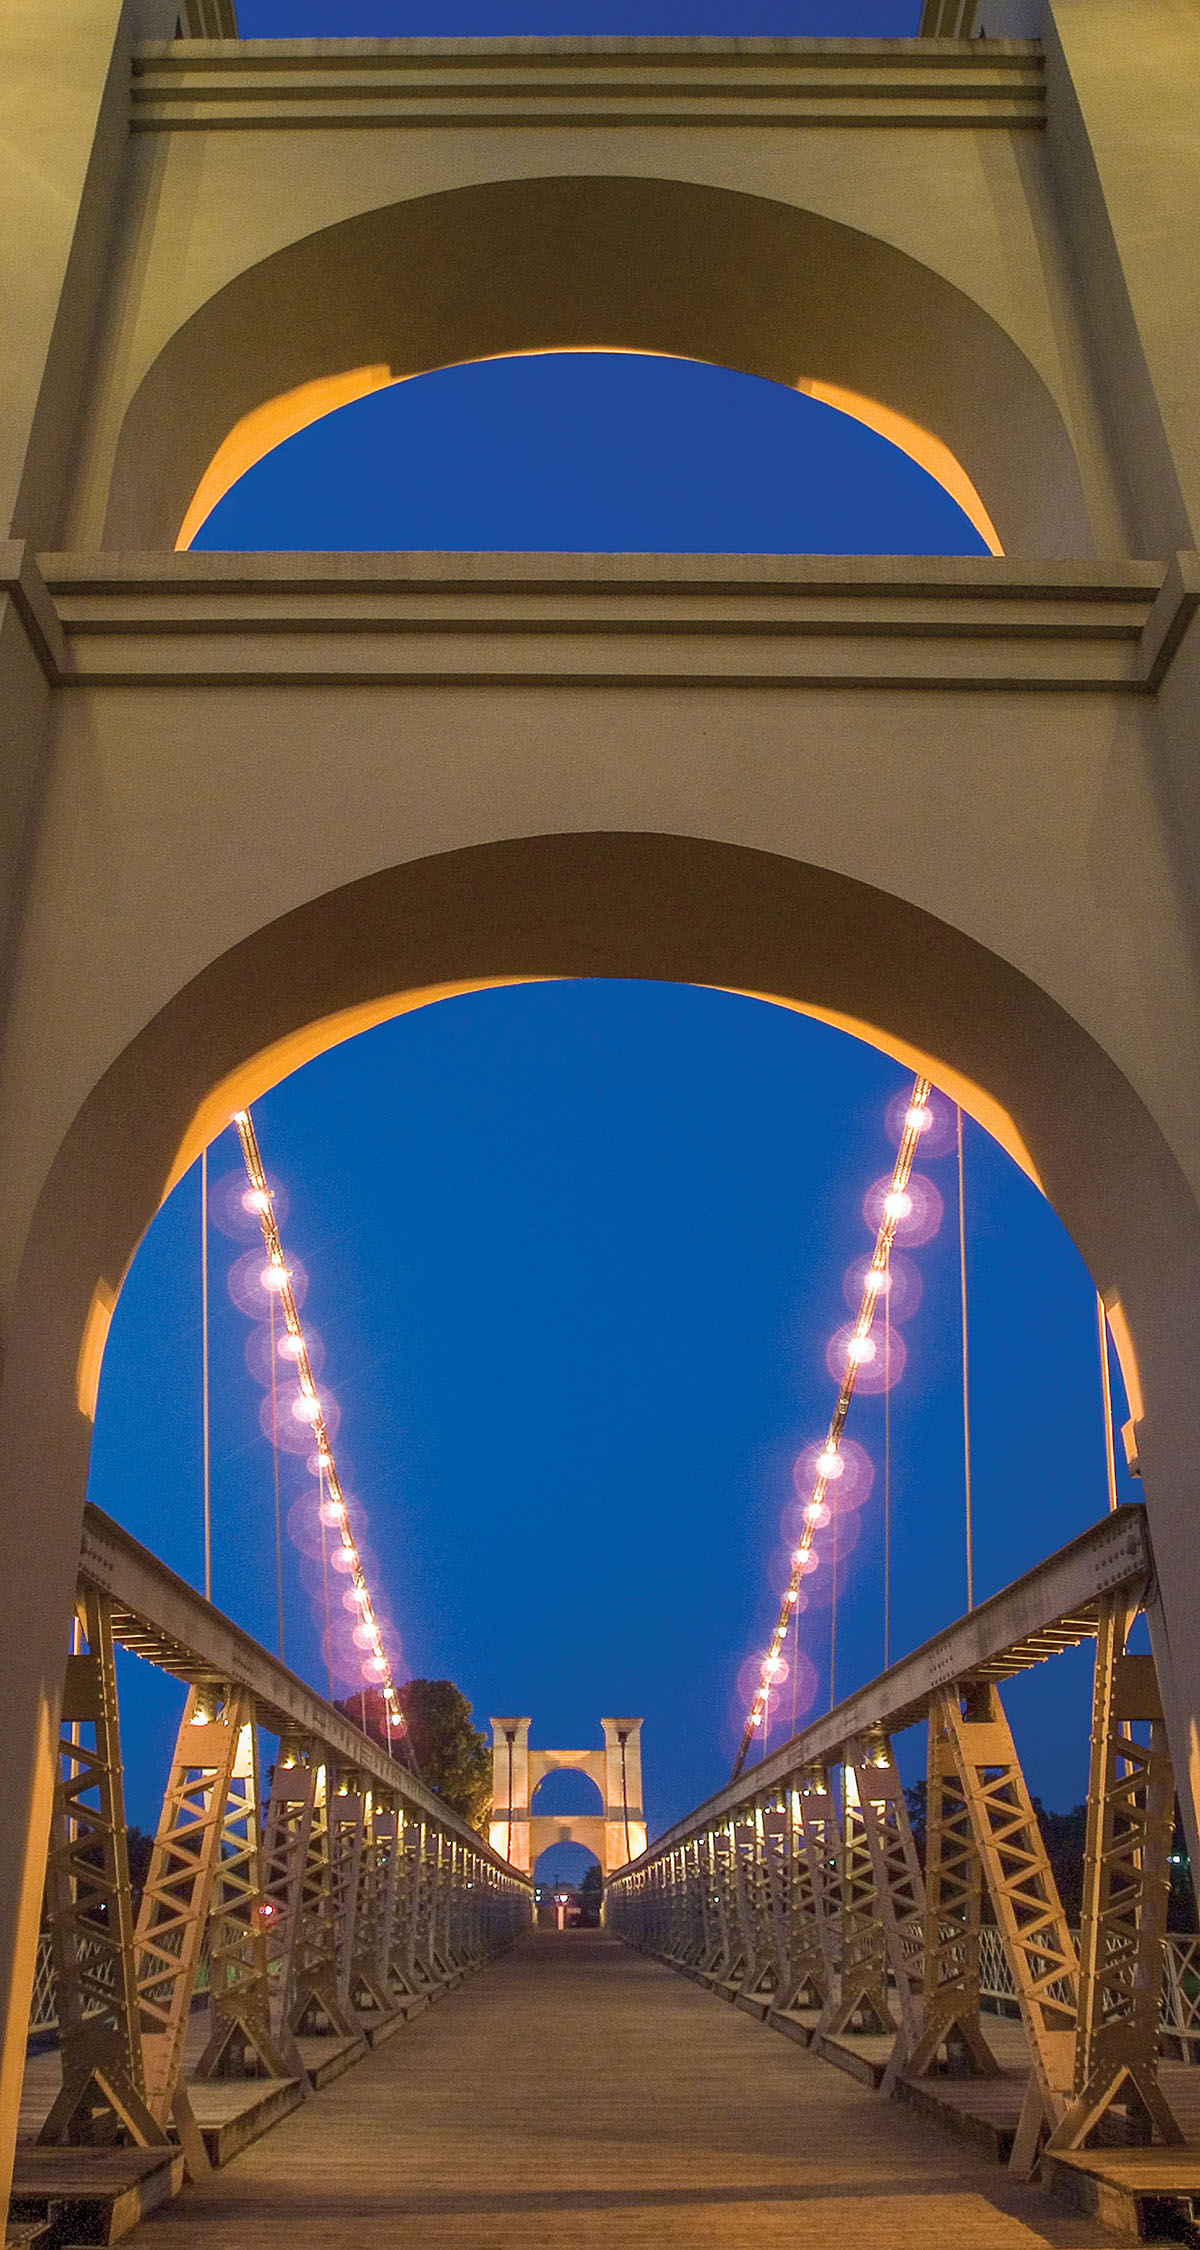 A view upward from the Waco Suspension Bridge showing a dark blue night sky and purple lights illuminating the bridge